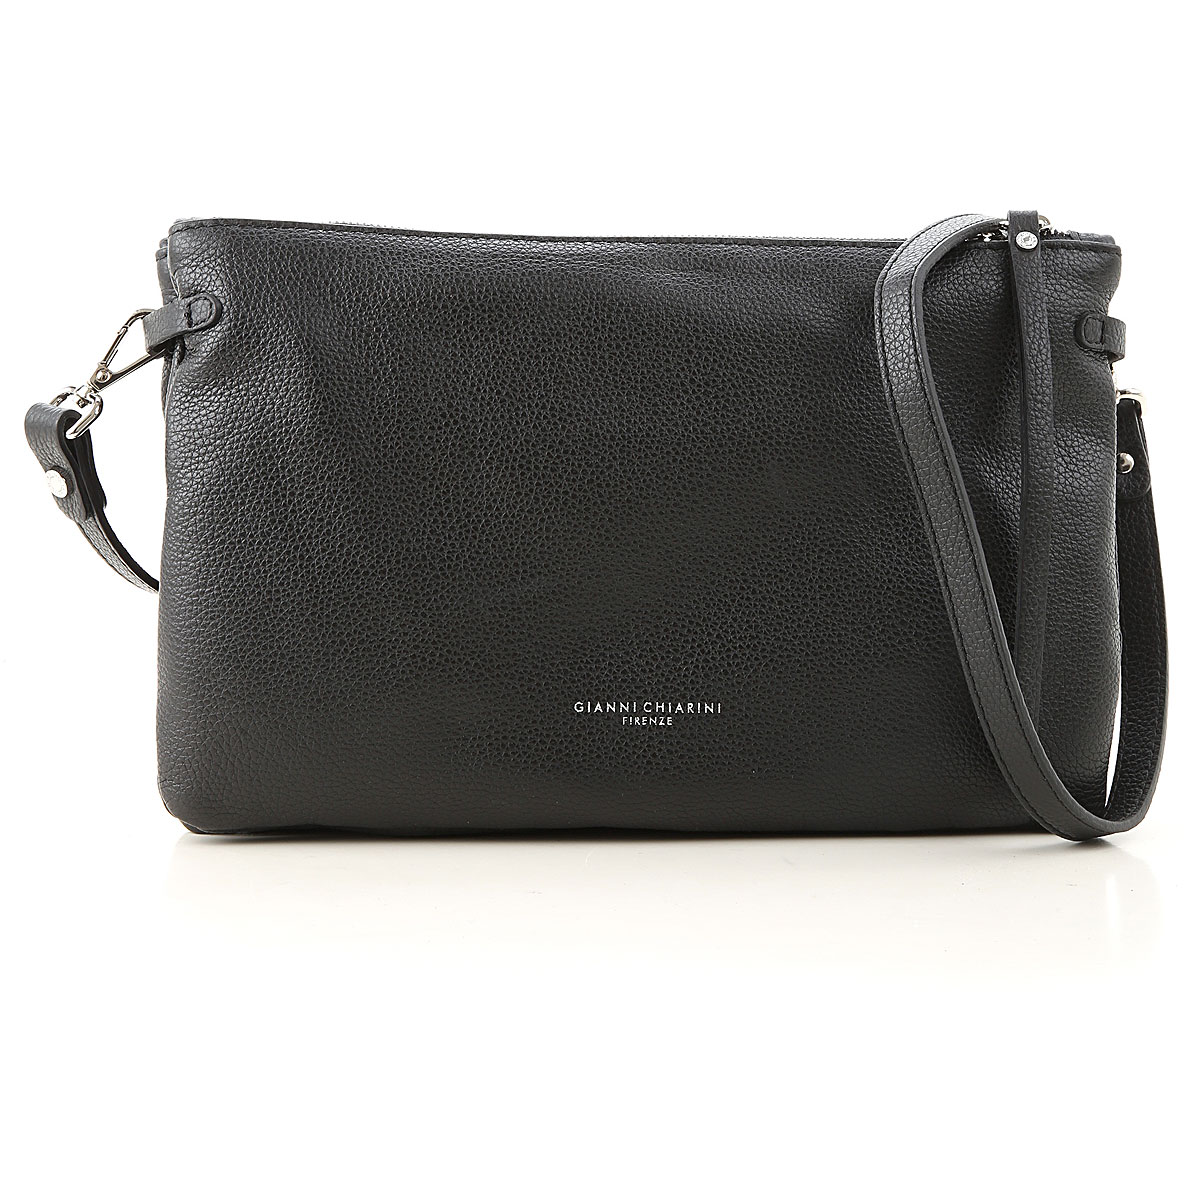 Handbags Gianni Chiarini, Style code: 3697-0lx-nero